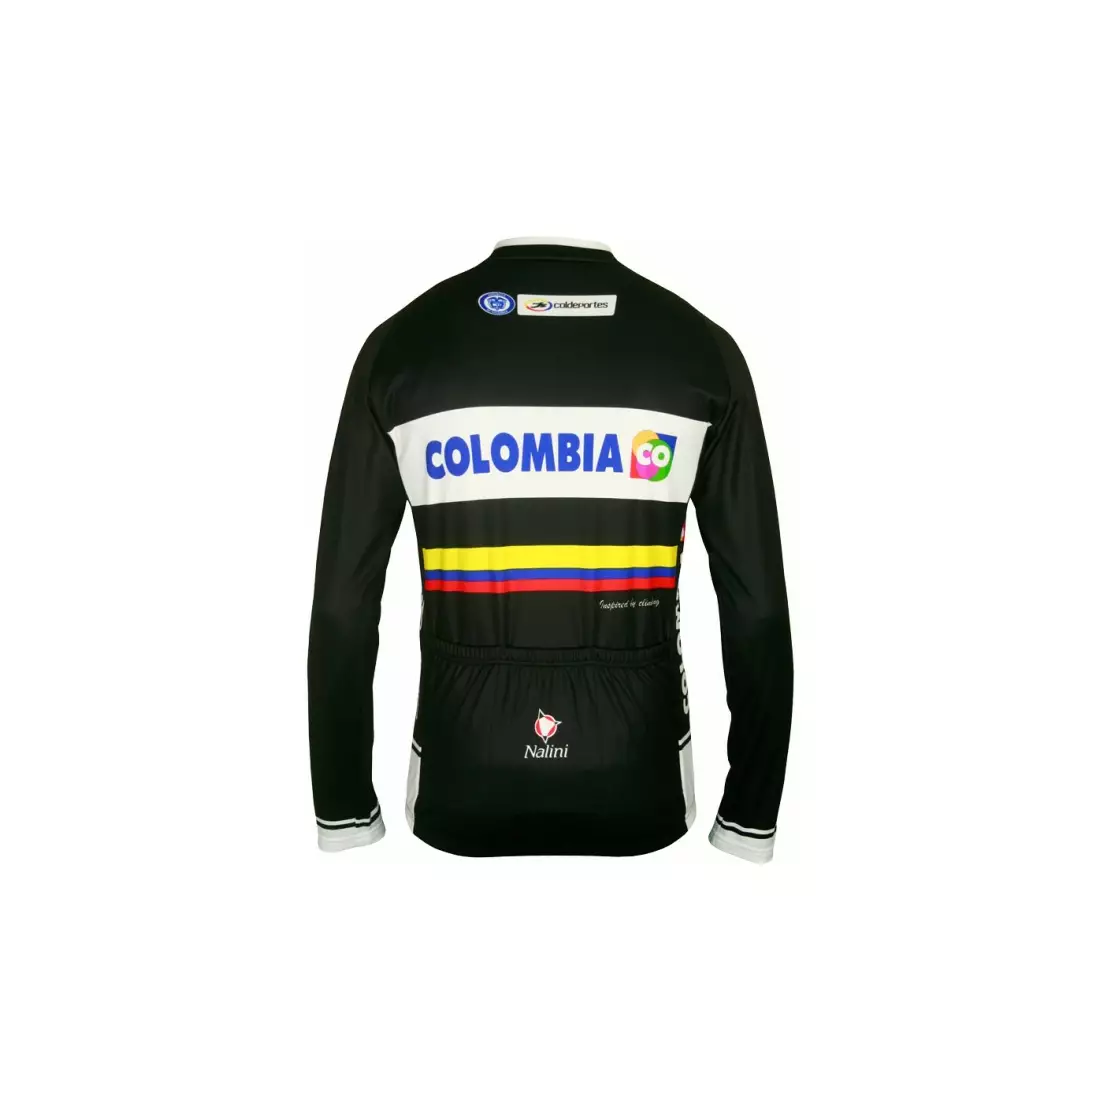 NALINI - TEAM COLOMBIA 2014 - cycling sweatshirt